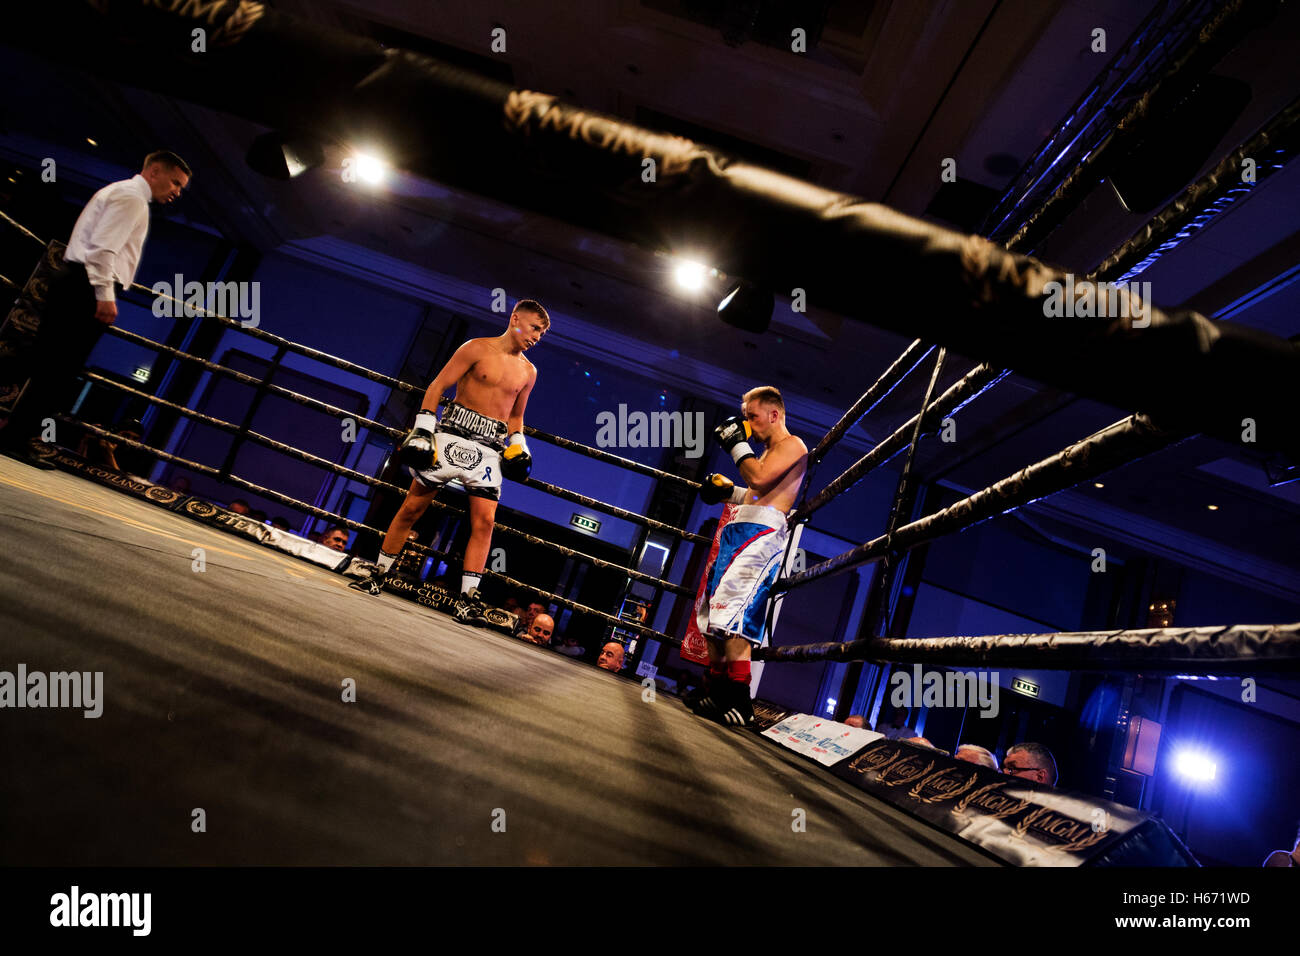 La boxe, fight night action ringside Banque D'Images